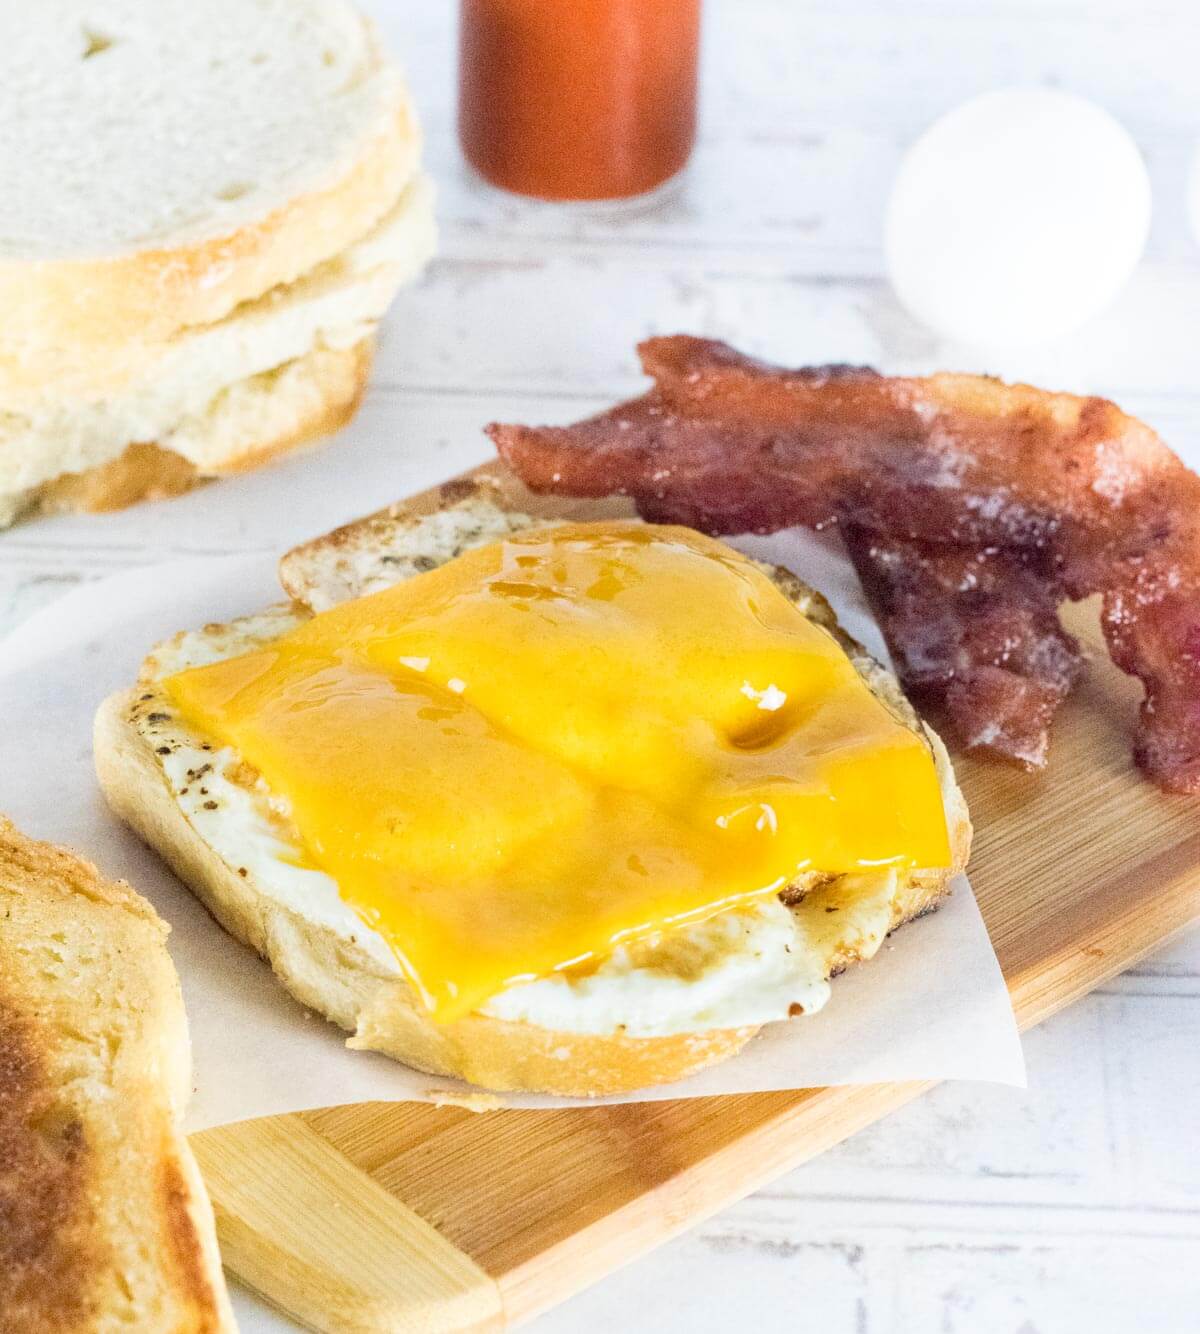 https://www.foxvalleyfoodie.com/wp-content/uploads/2020/03/fried-egg-sandwich-cheese-bacon.jpg